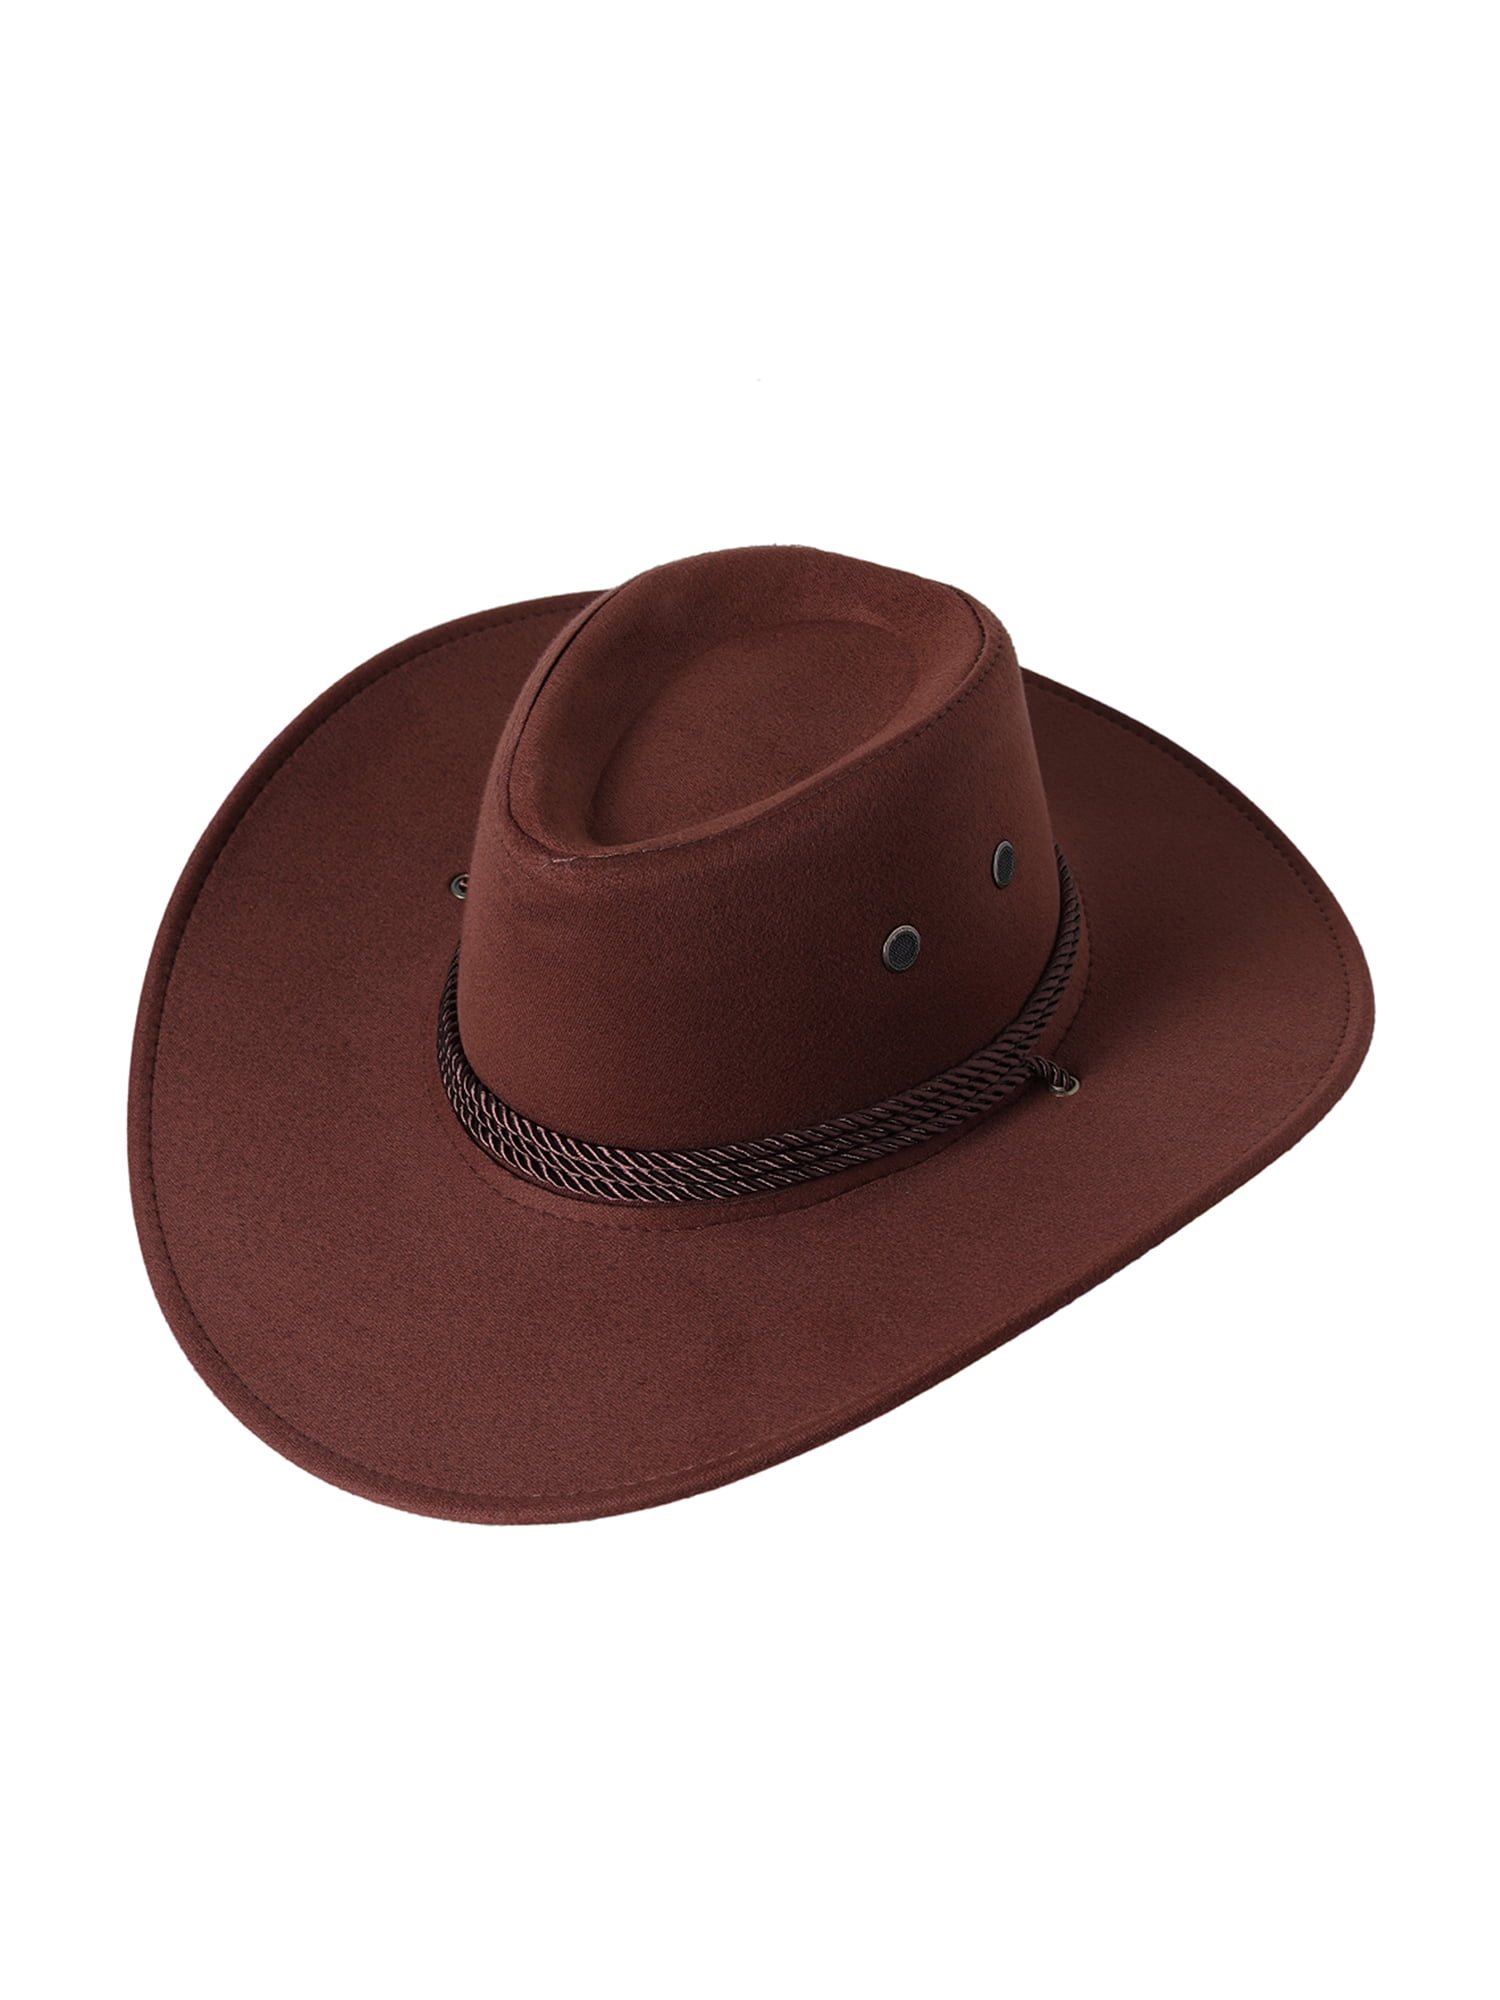 Fashion Wool Panama Hat Western Style Cowboy Hat Women Men Accessories 